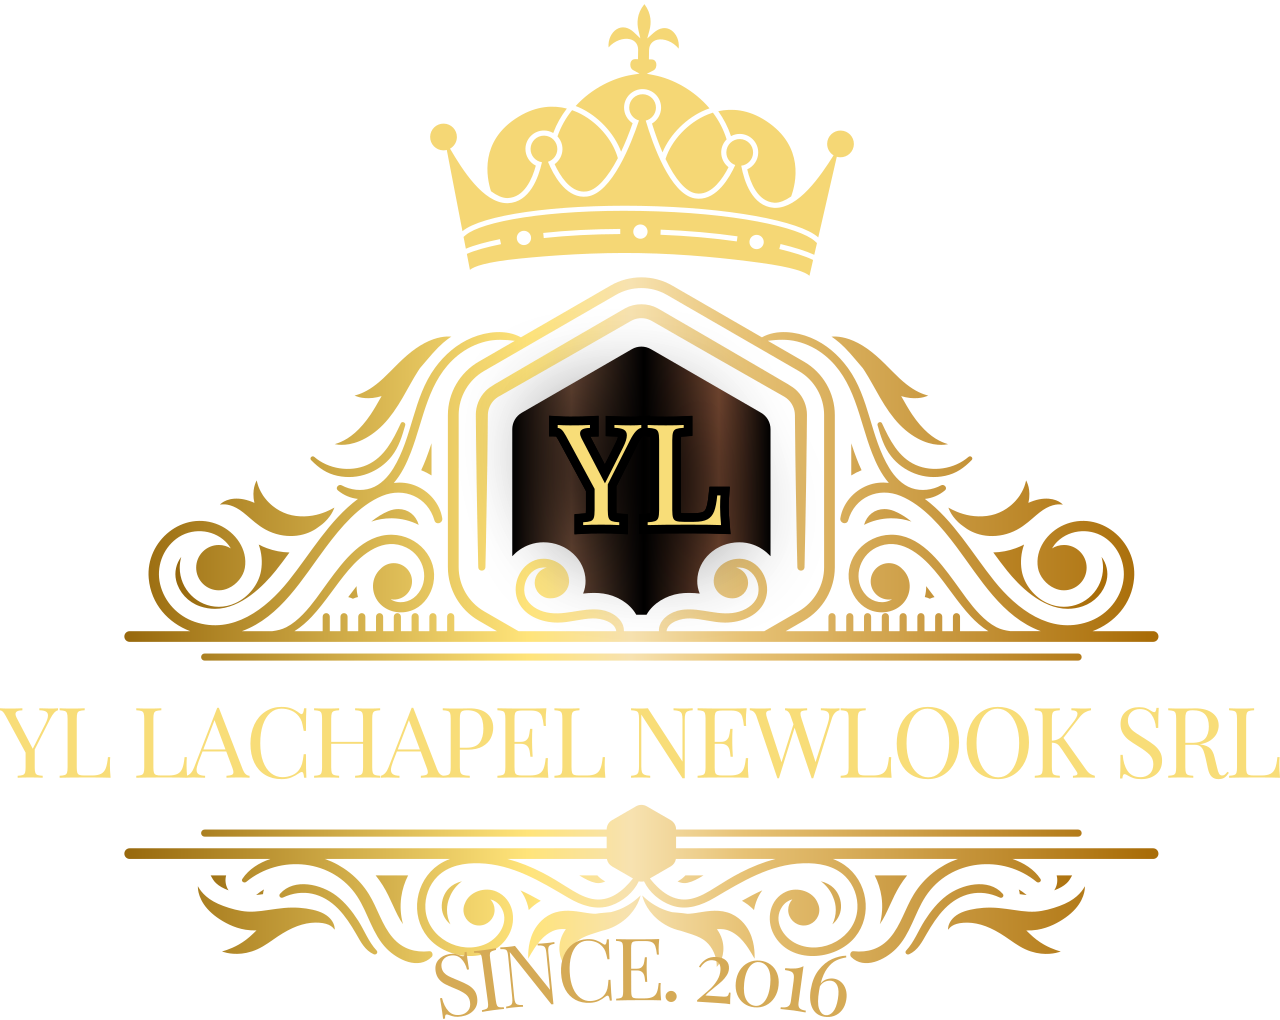 YL Lachapel Newlook SRL's logo